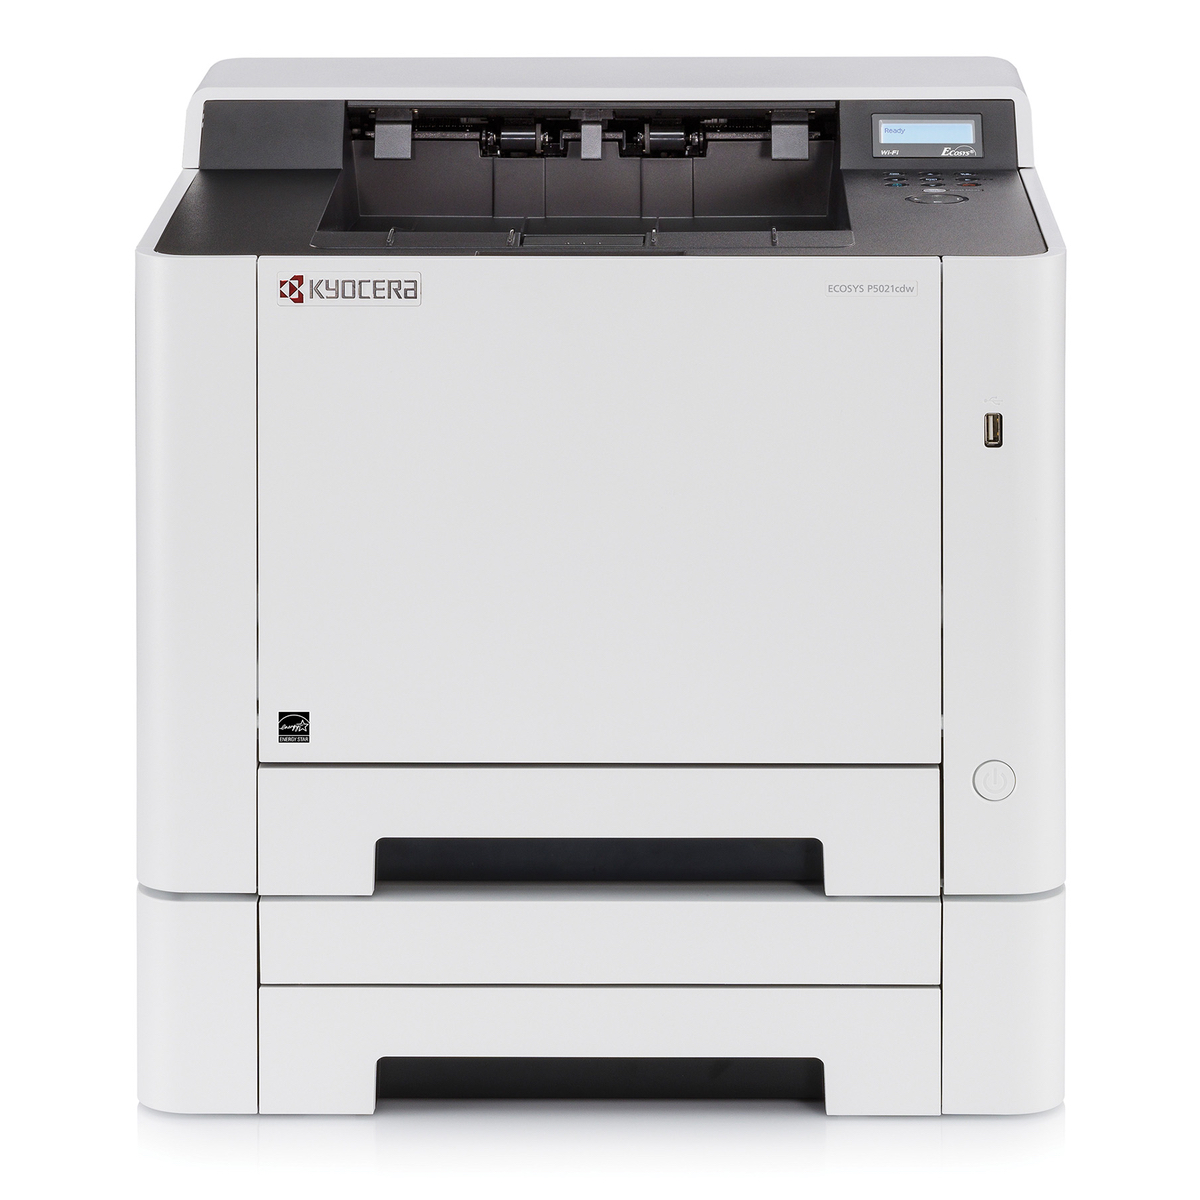 Kyocera Printers:  The Kyocera ECOSYS P5021cdw Printer